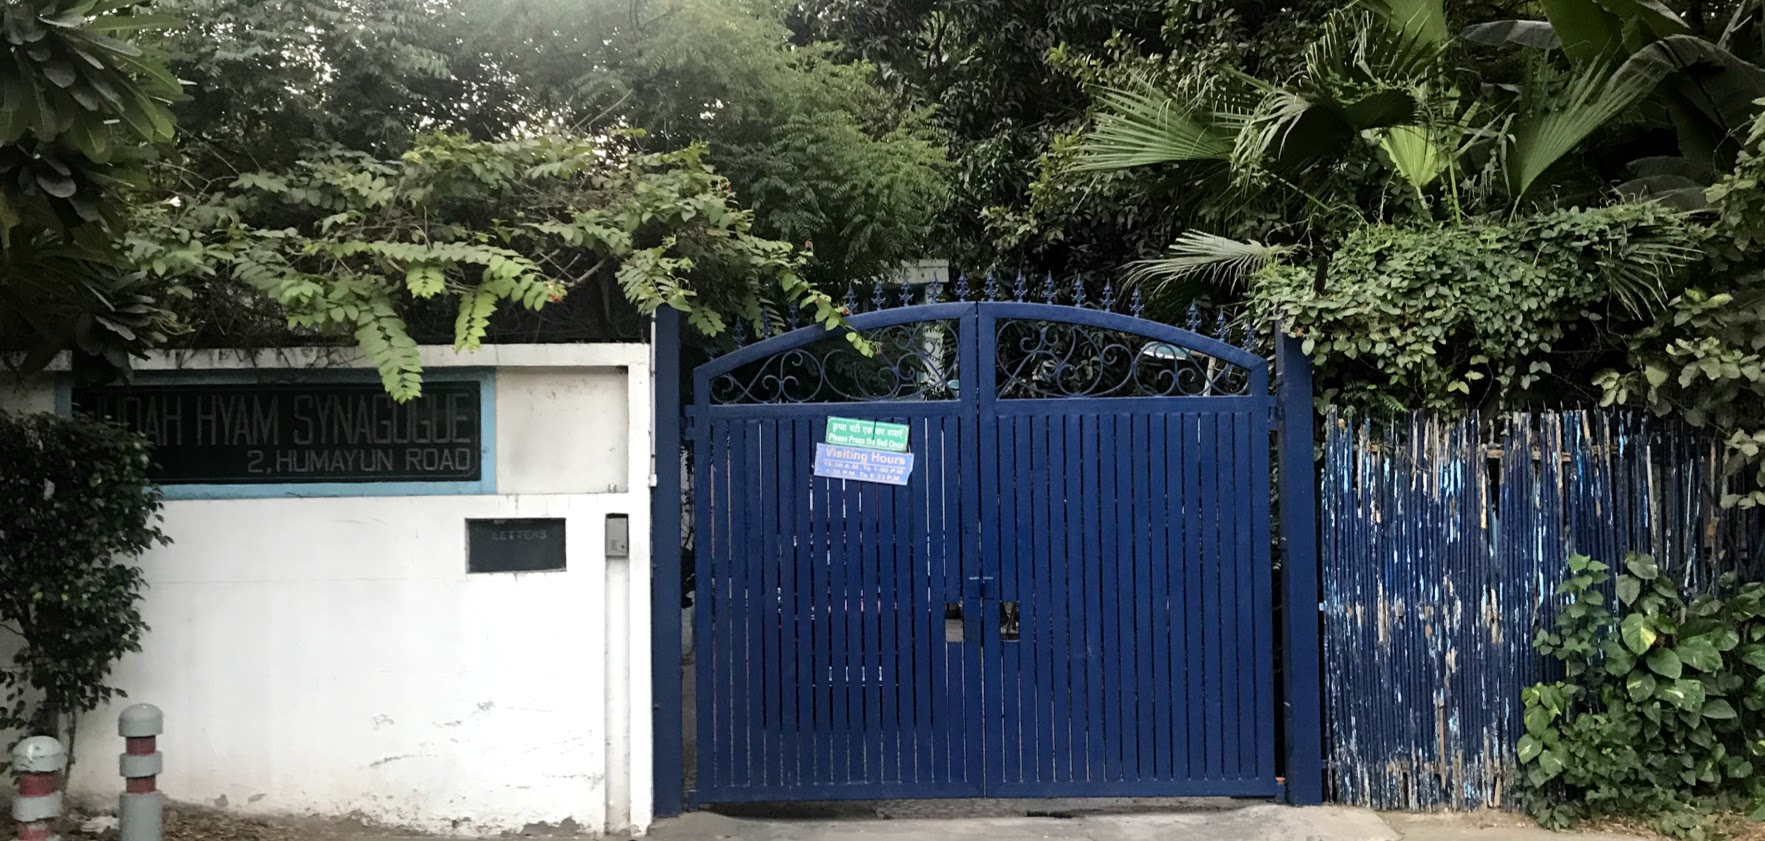 Main Entrance Judah Hyam Synagogue Delhi